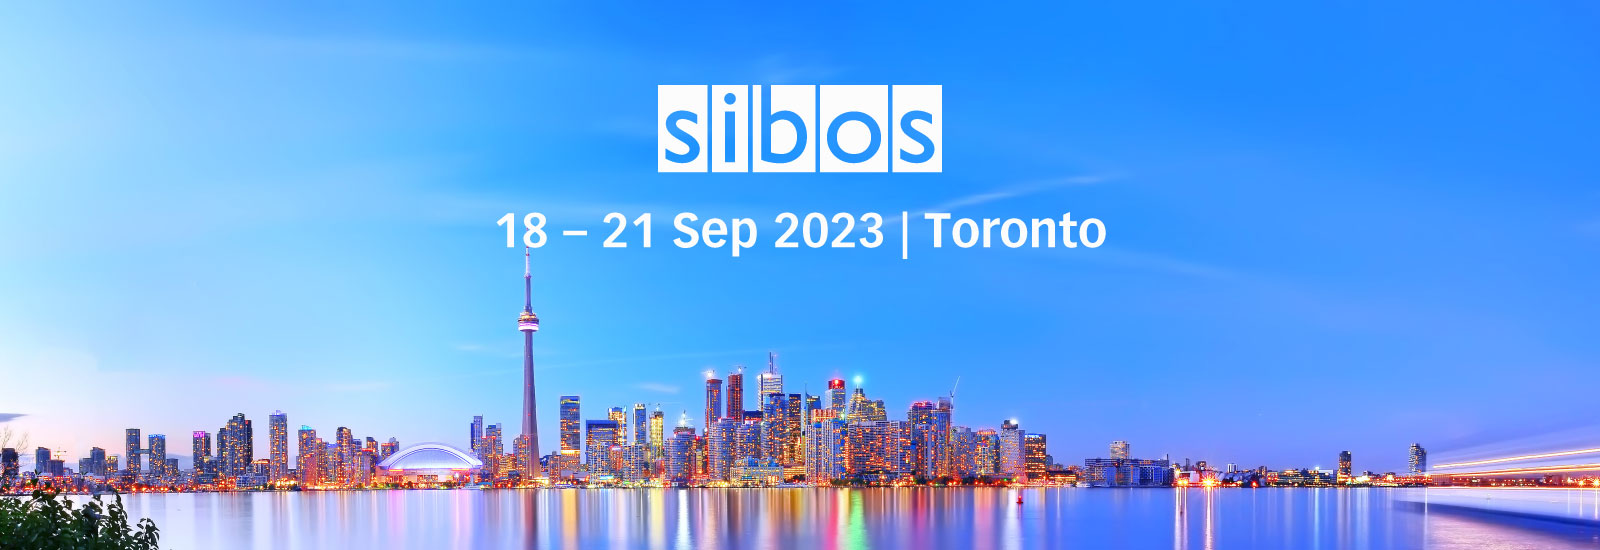 ProgressSoft at Sibos 2023